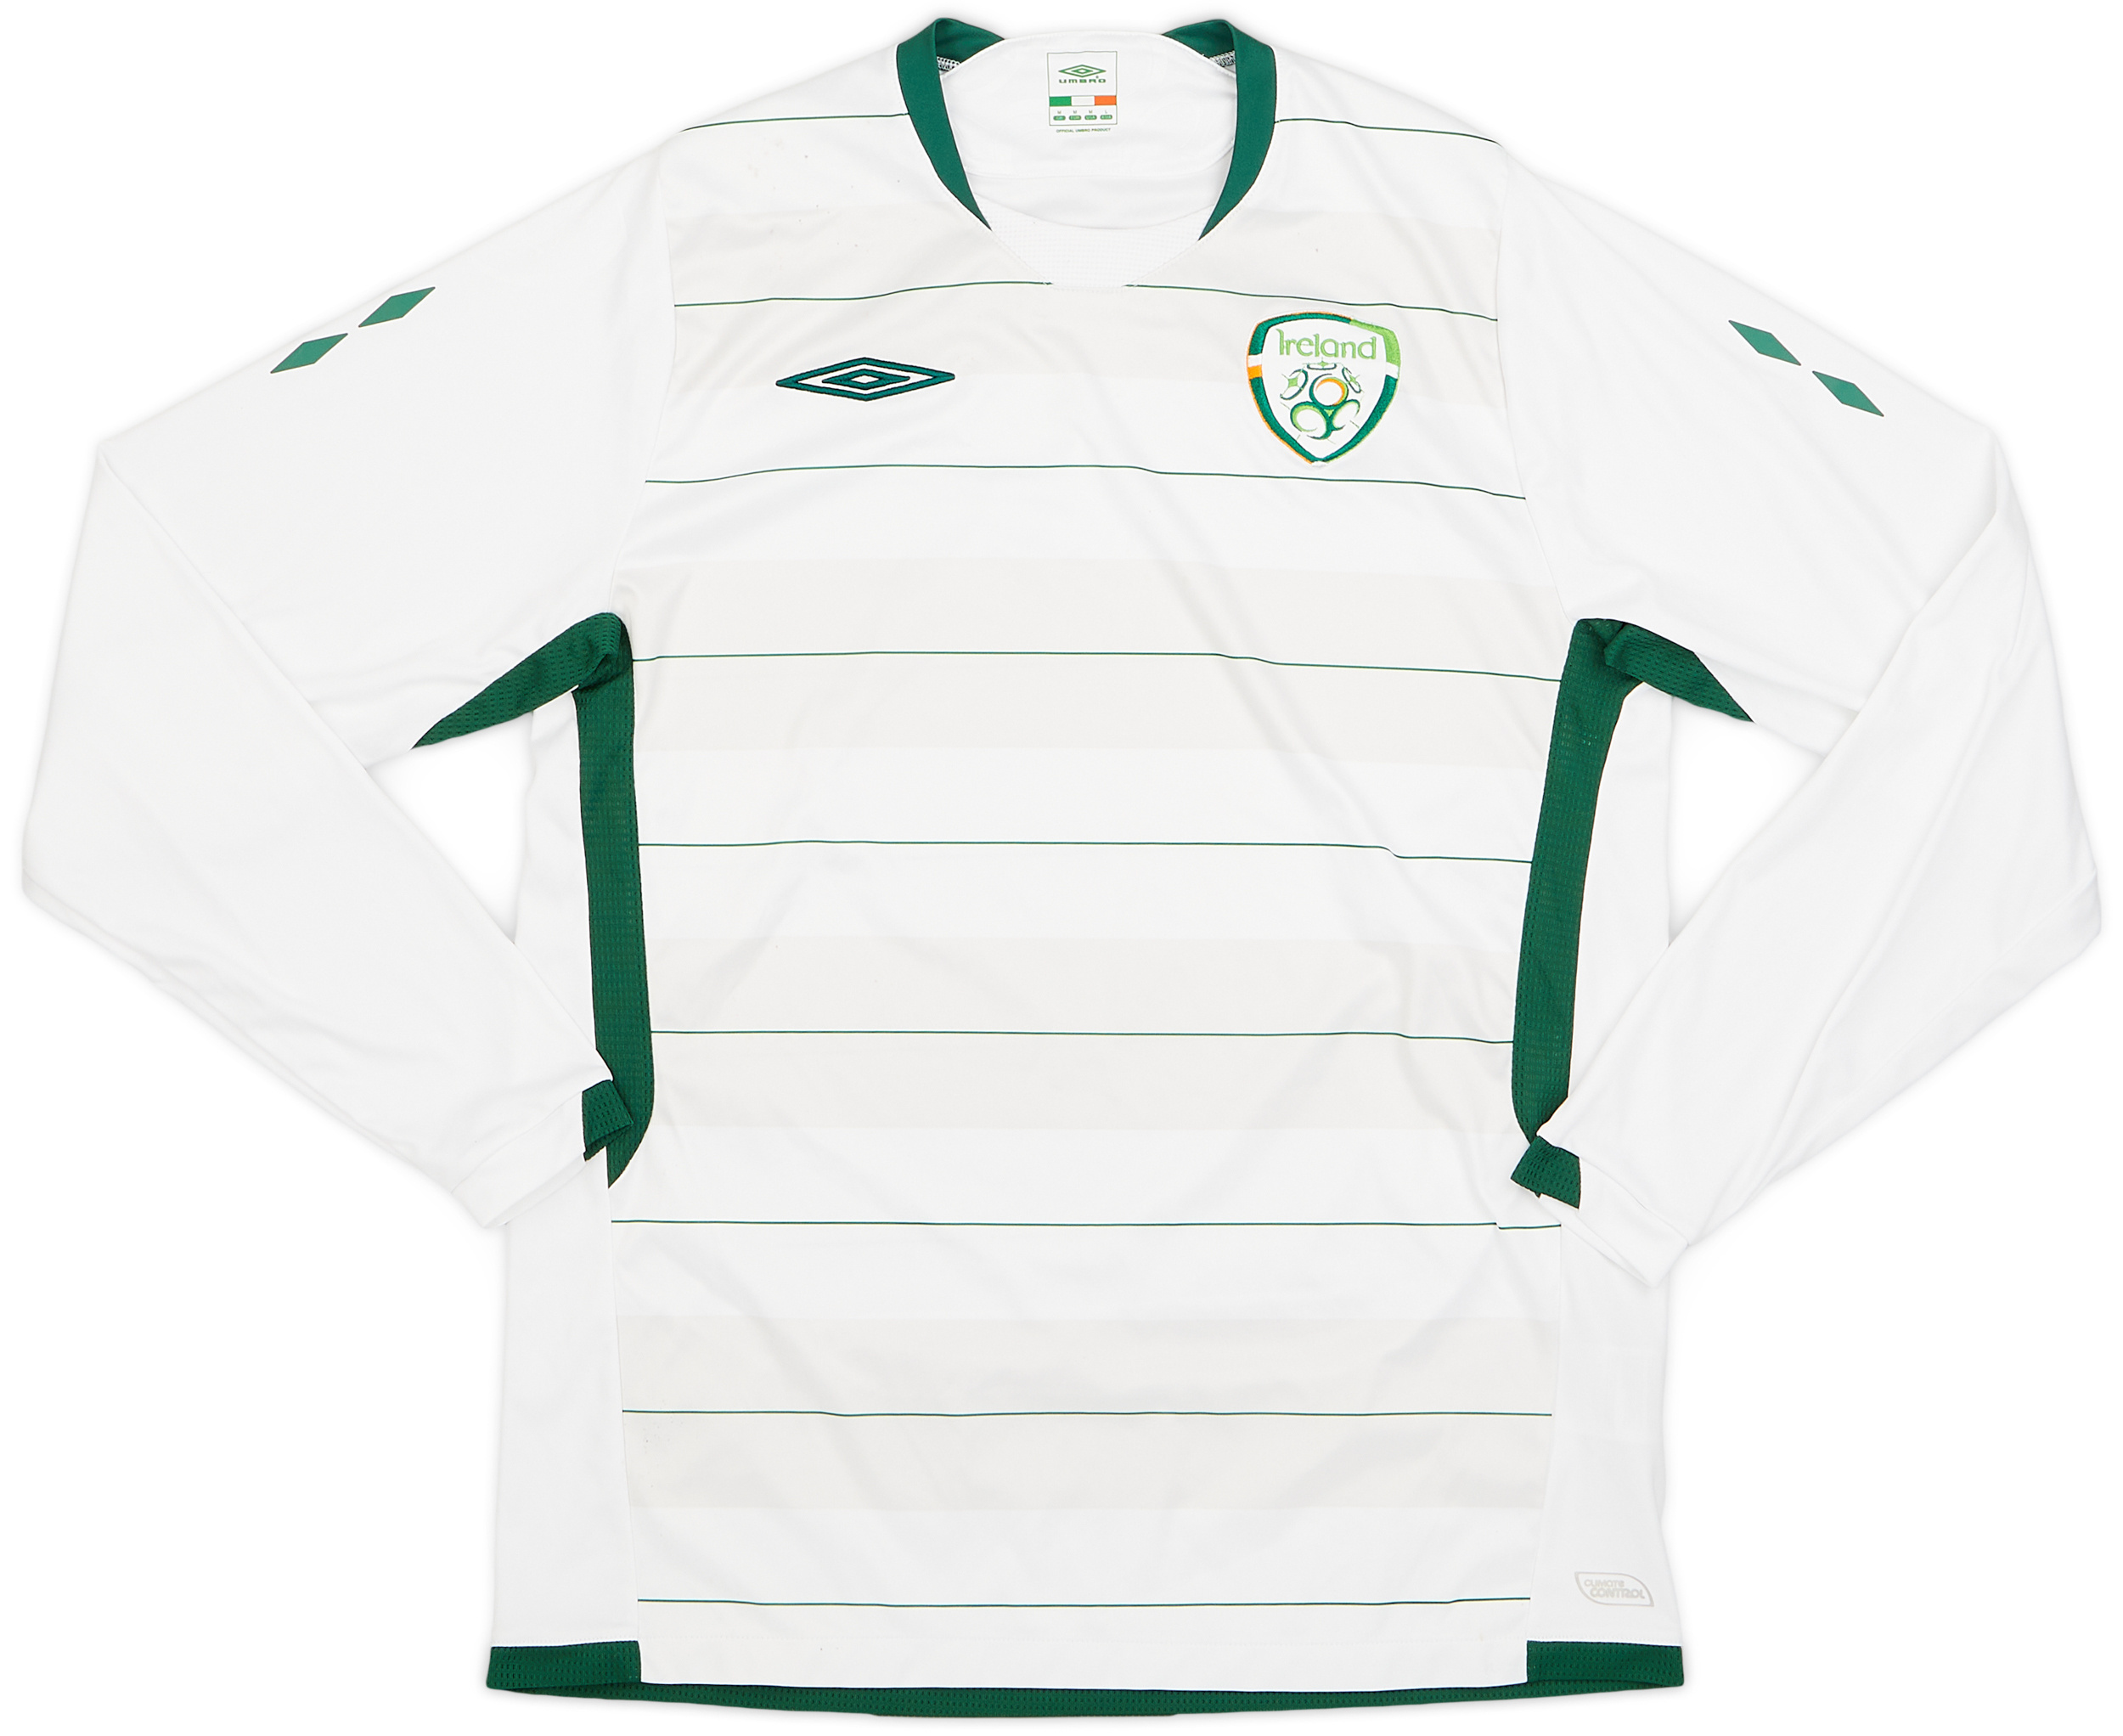 2009-10 Republic of Ireland Away Shirt - 8/10 - ()